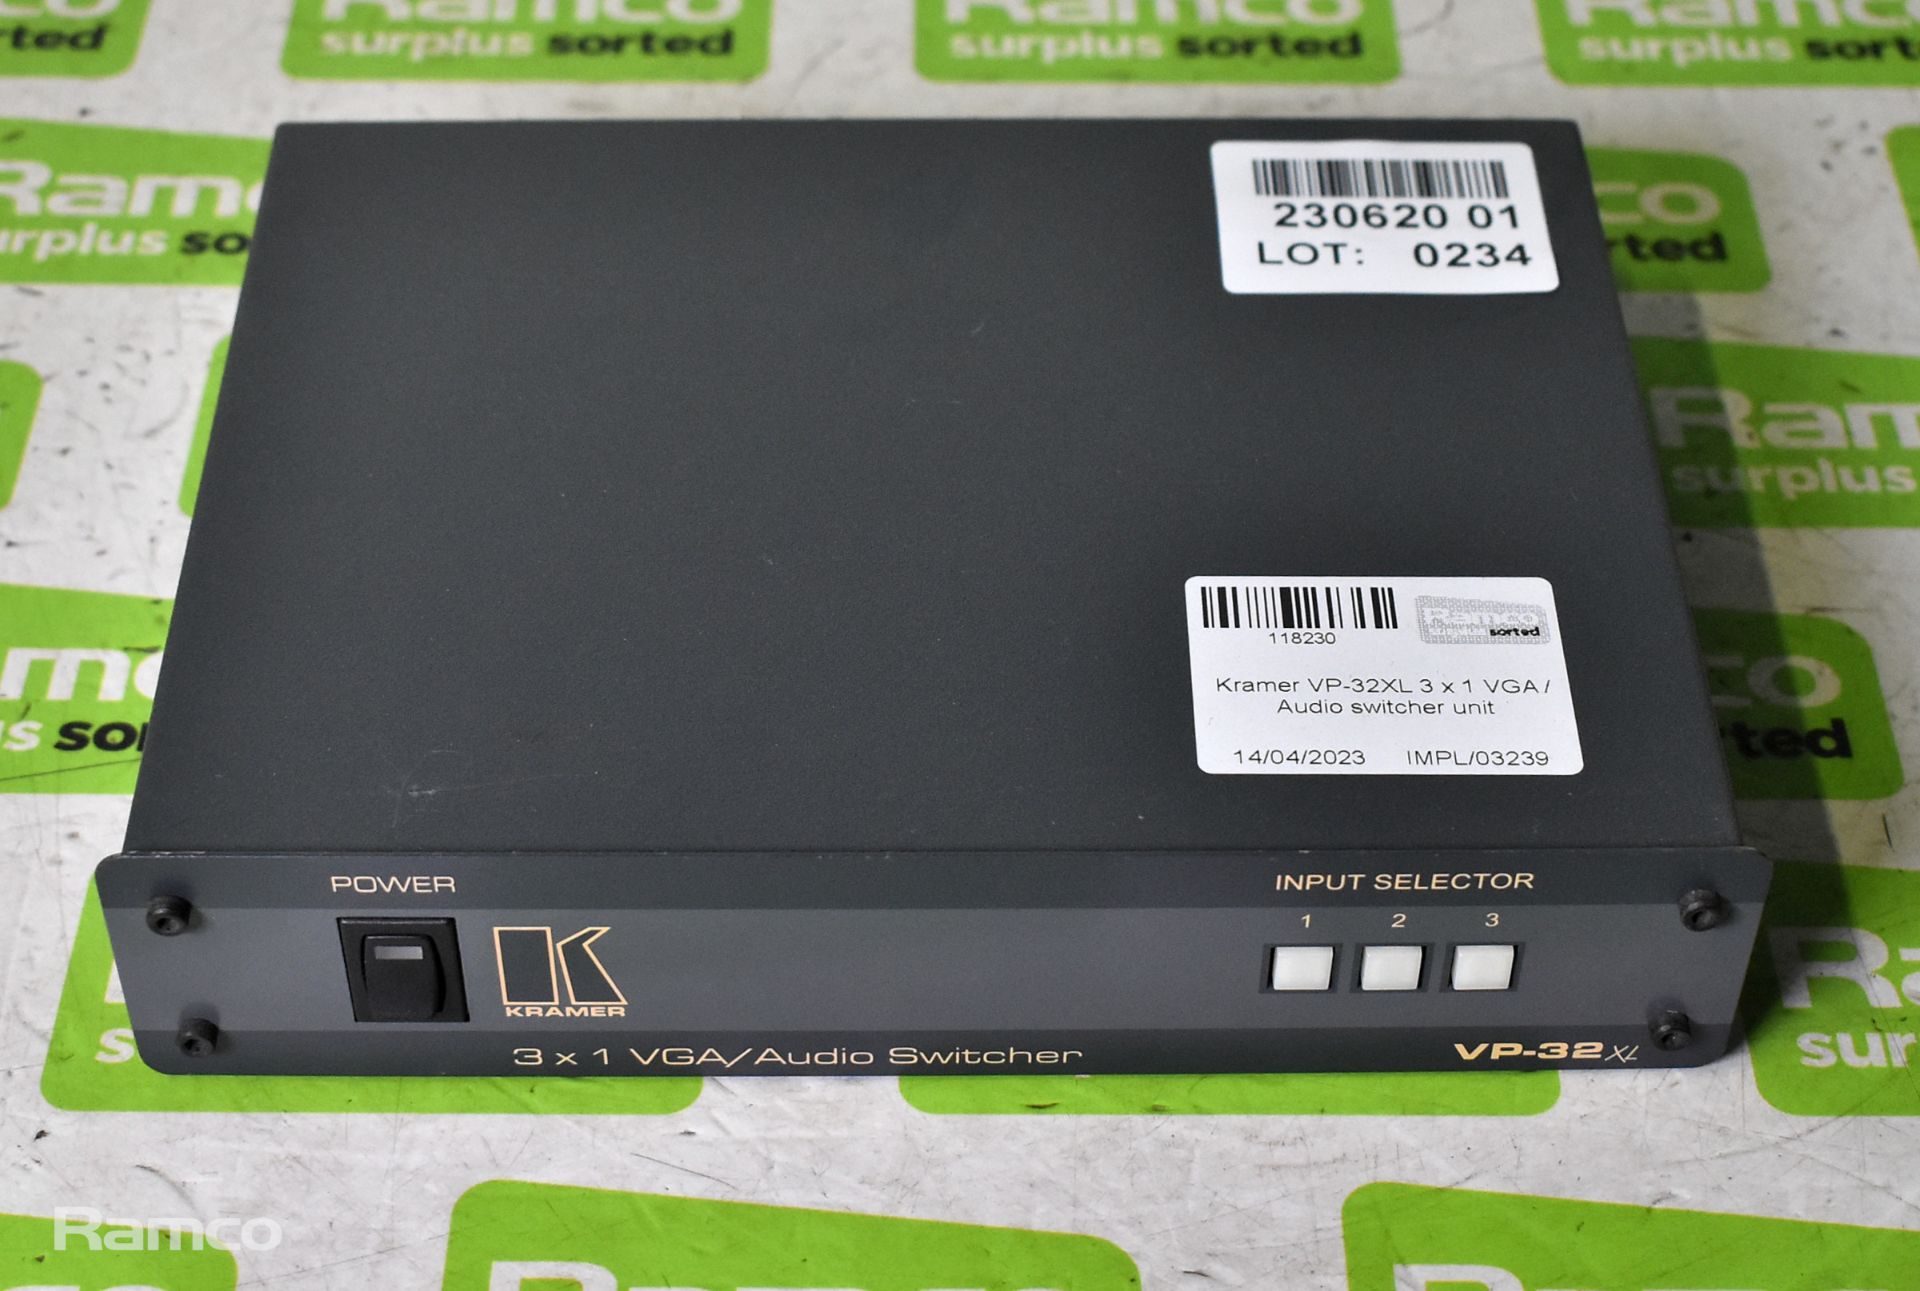 Kramer VP-32XL 3 x 1 VGA / Audio switcher unit